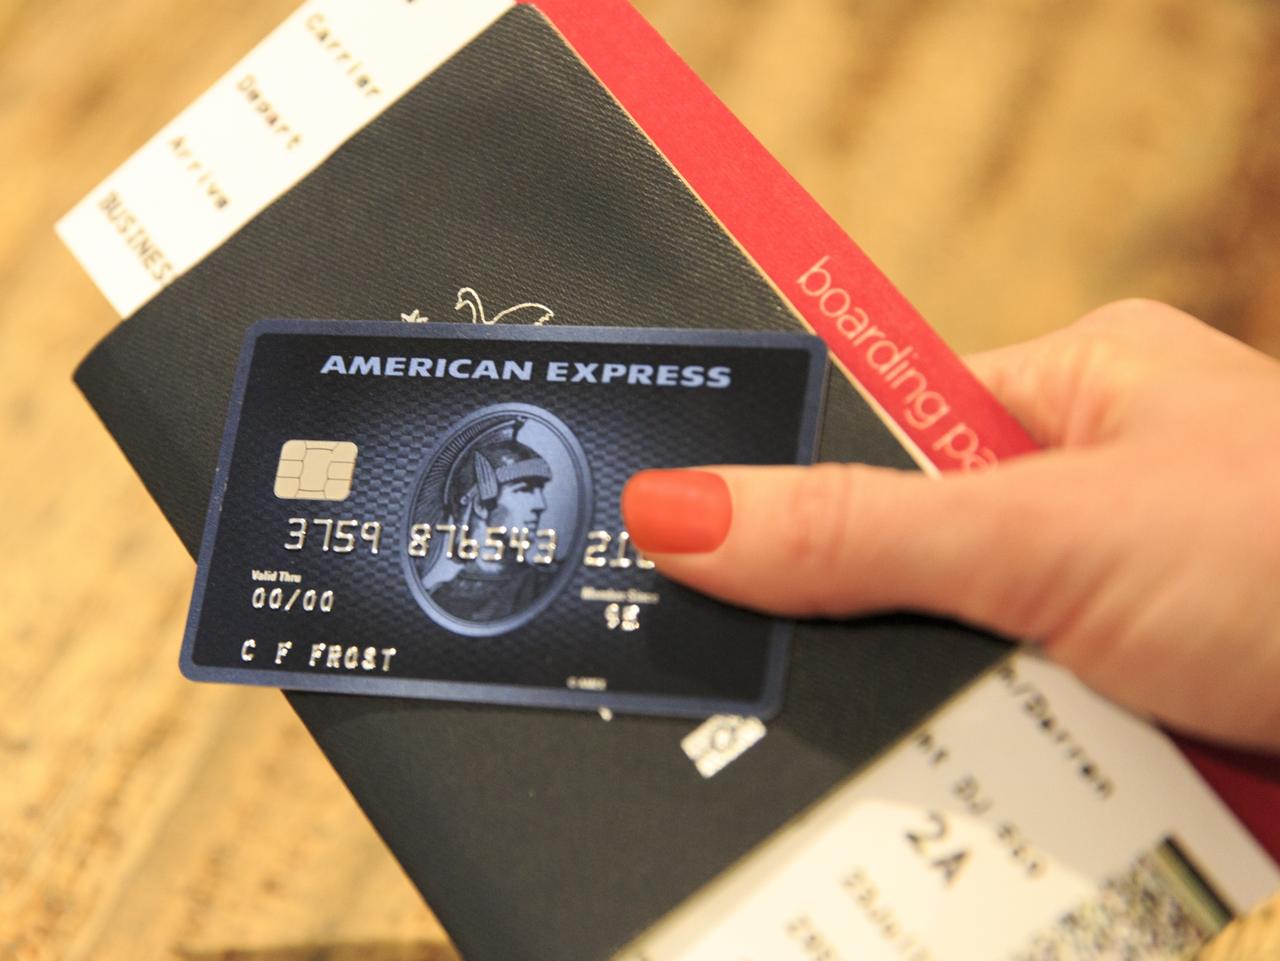 Travel essentials - credit card and passport